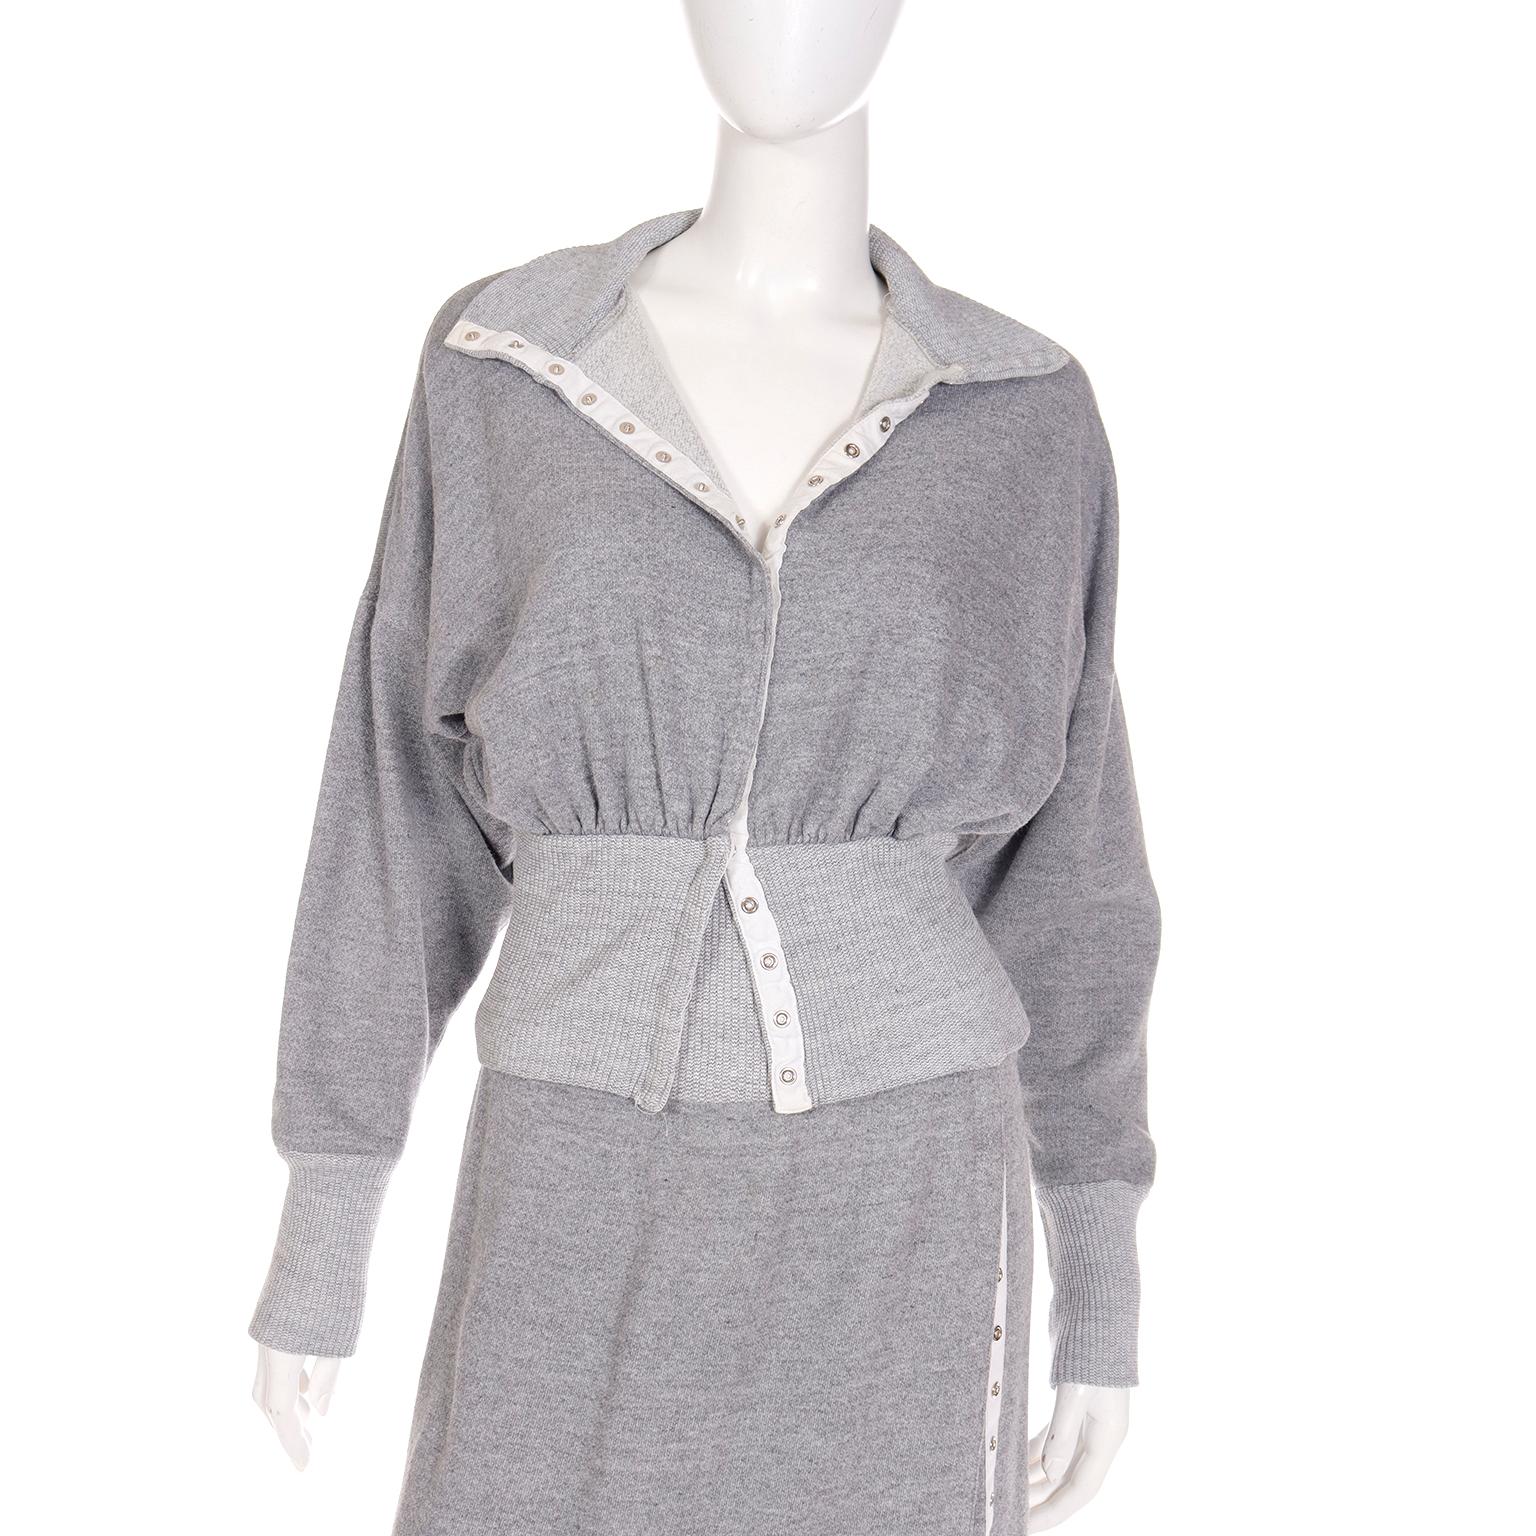 Norma Kamali 1980 Sweats Grey Sweatshirt 2 pc Dress w Snap Front Top & Skirt For Sale 2